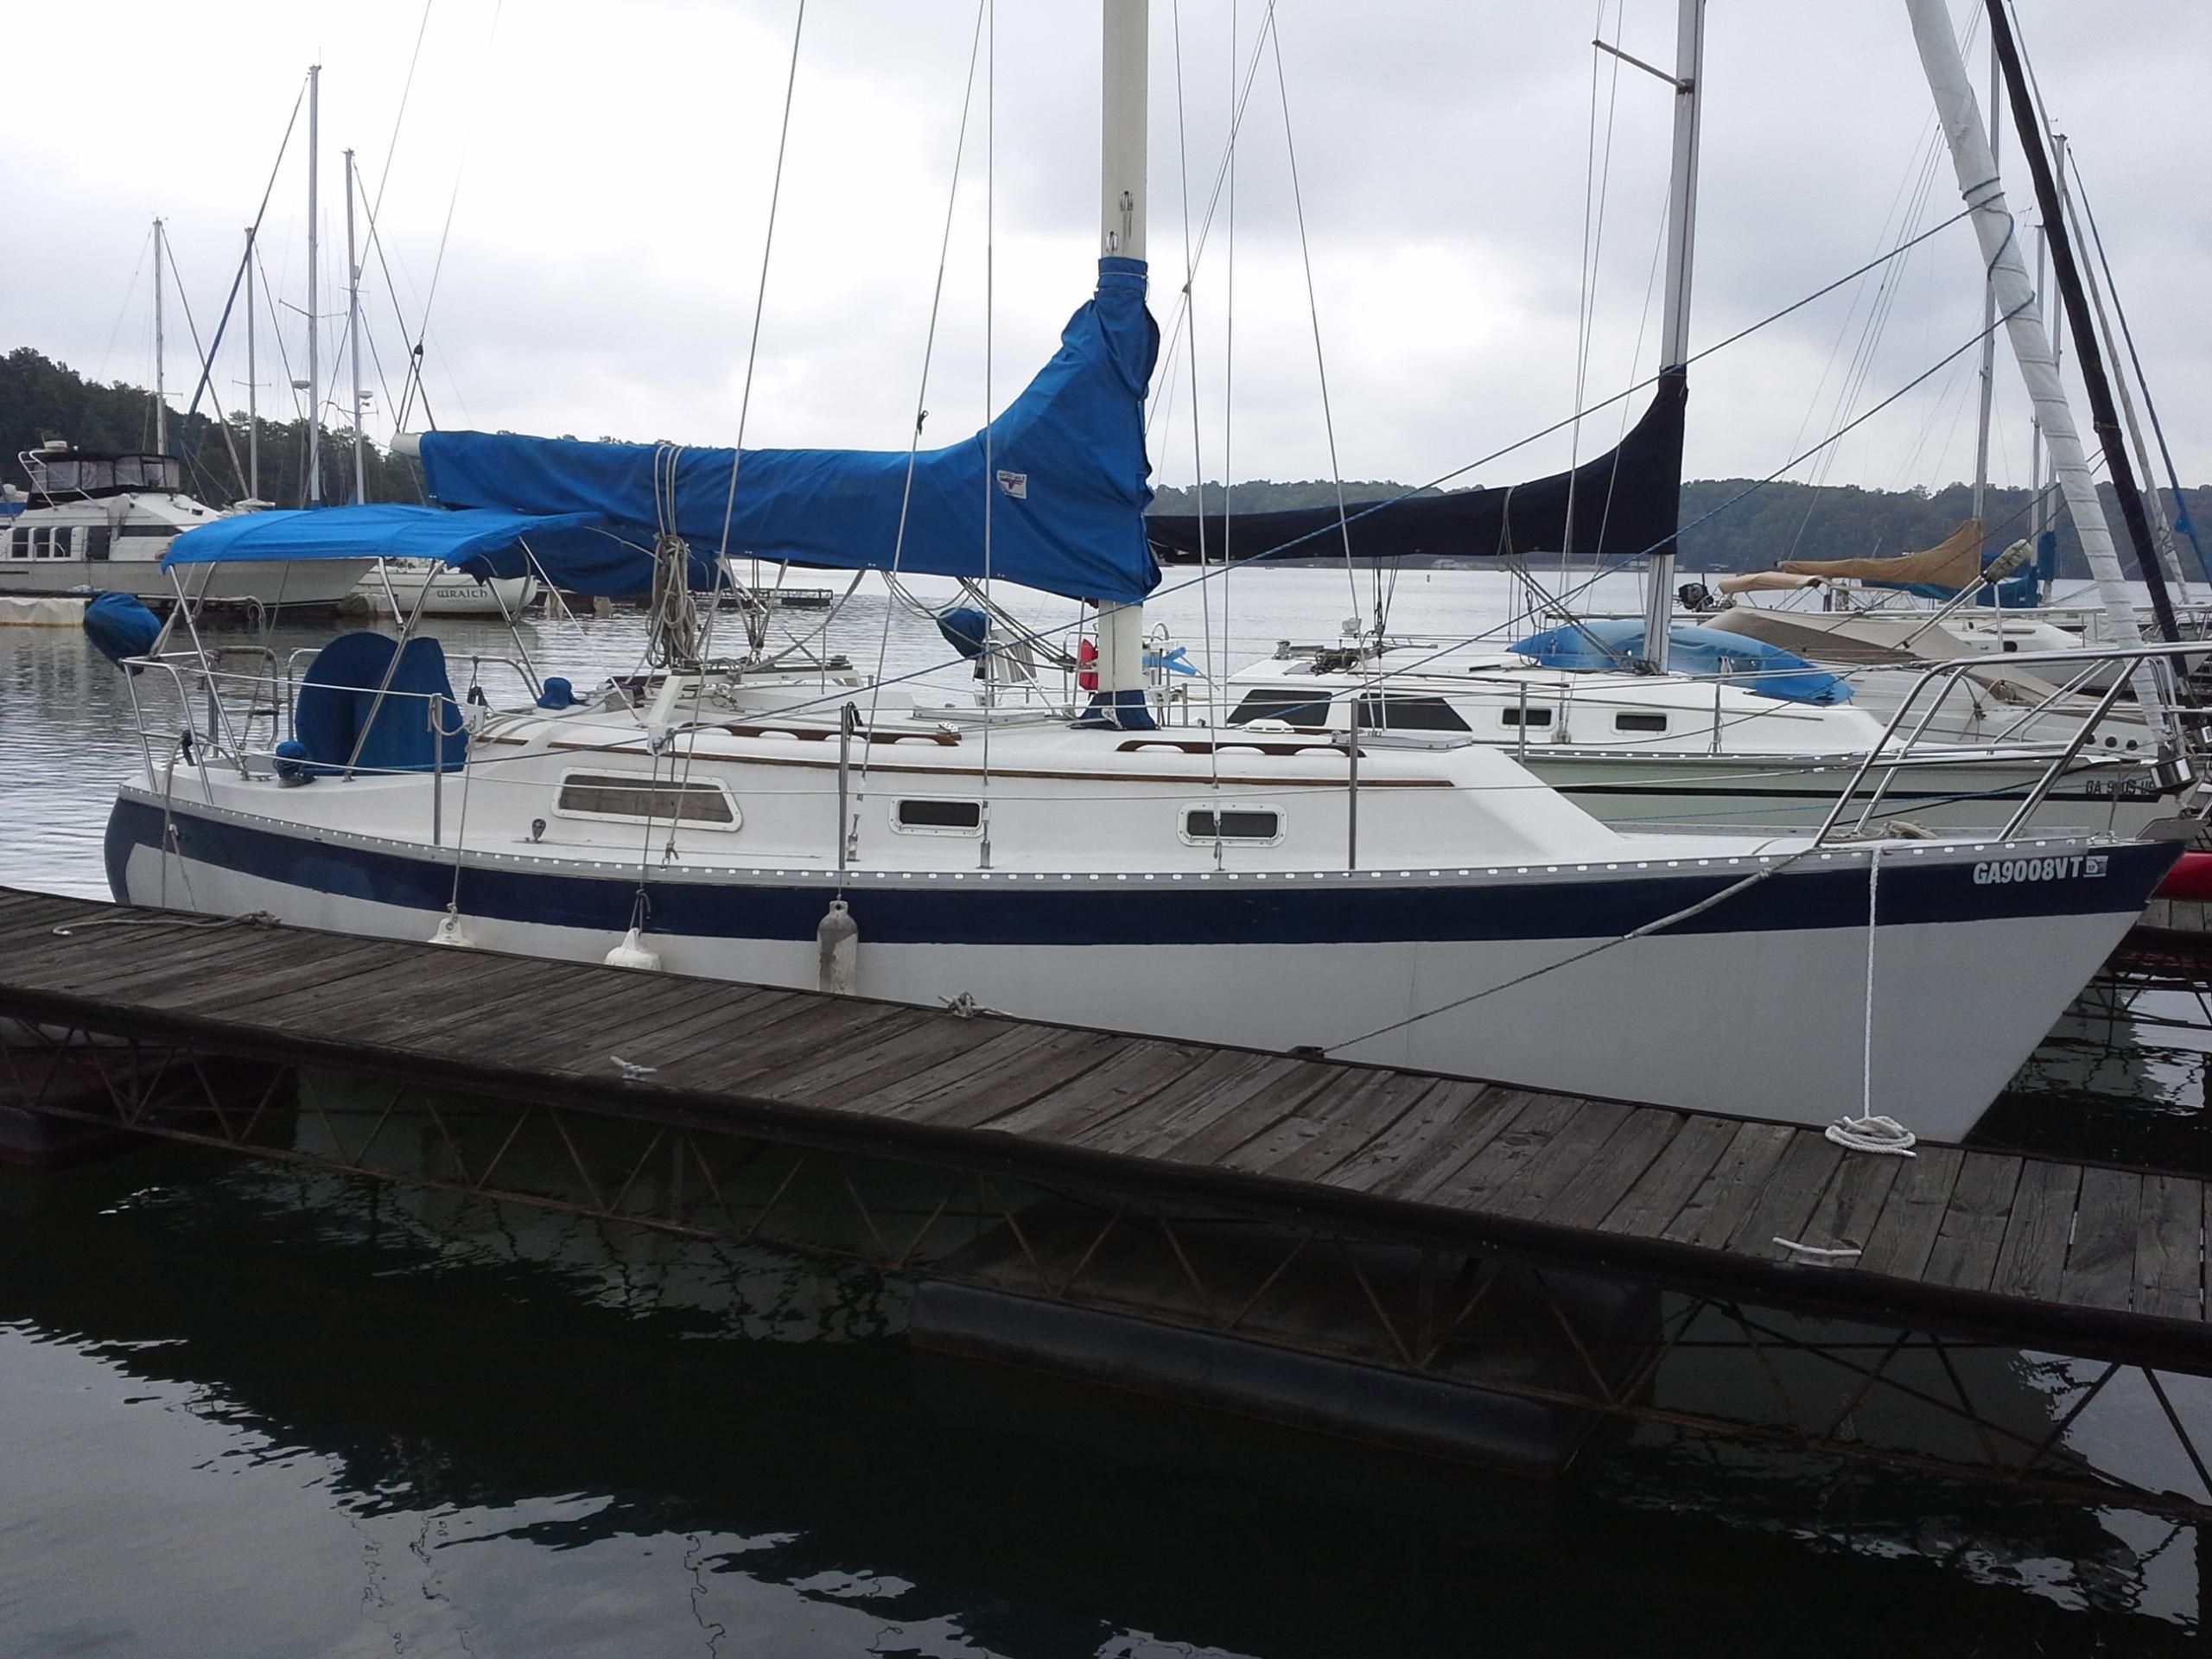 1985 irwin 31 citation sailboat